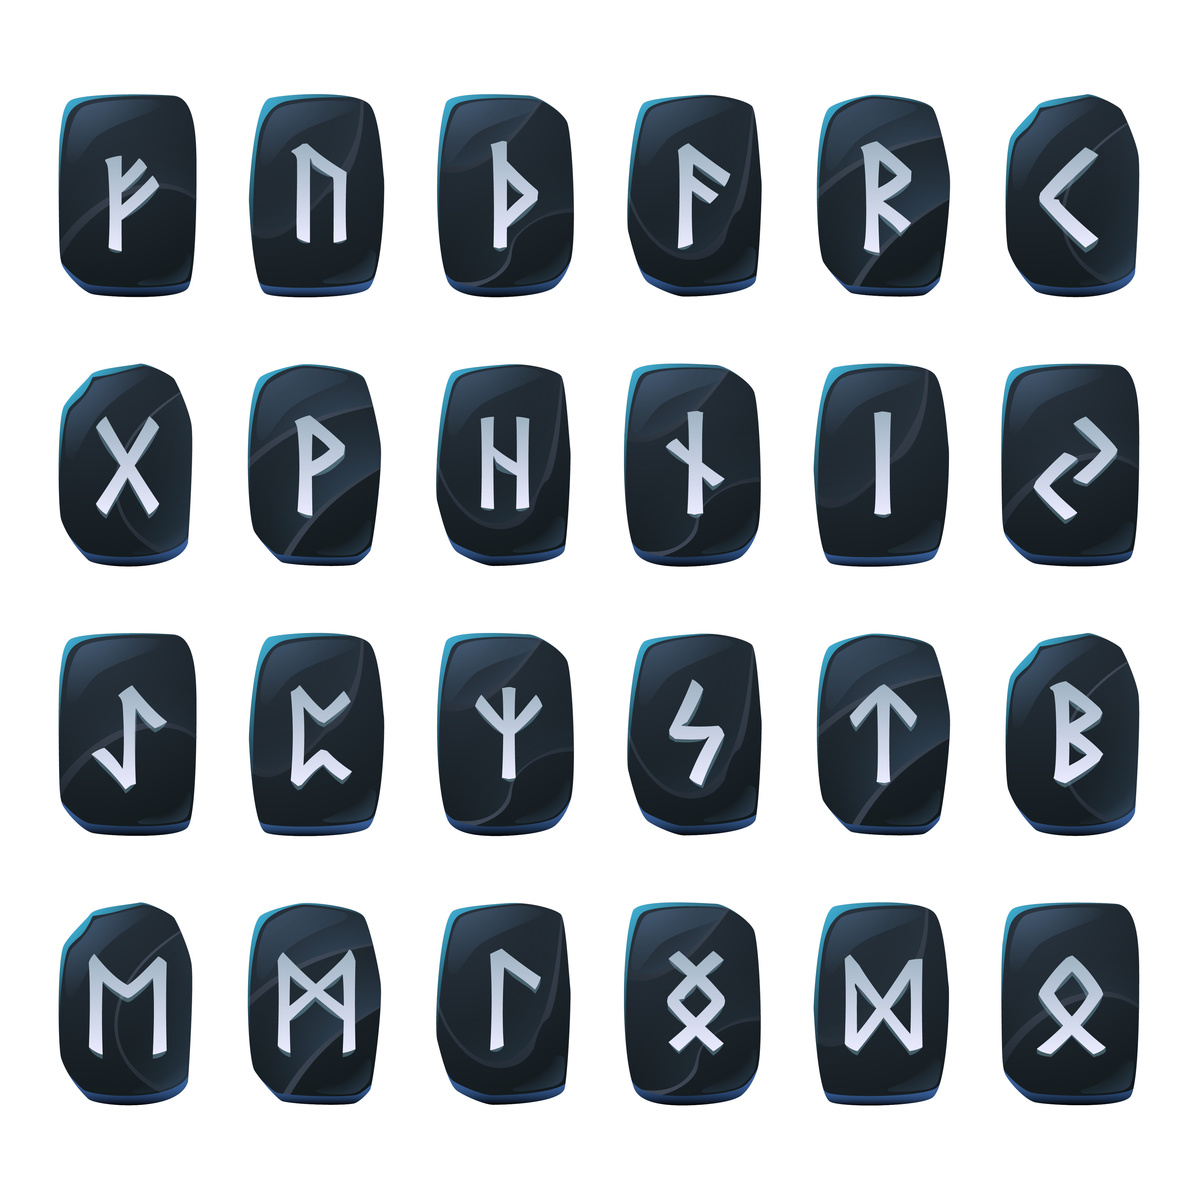 Vários estilos de runas